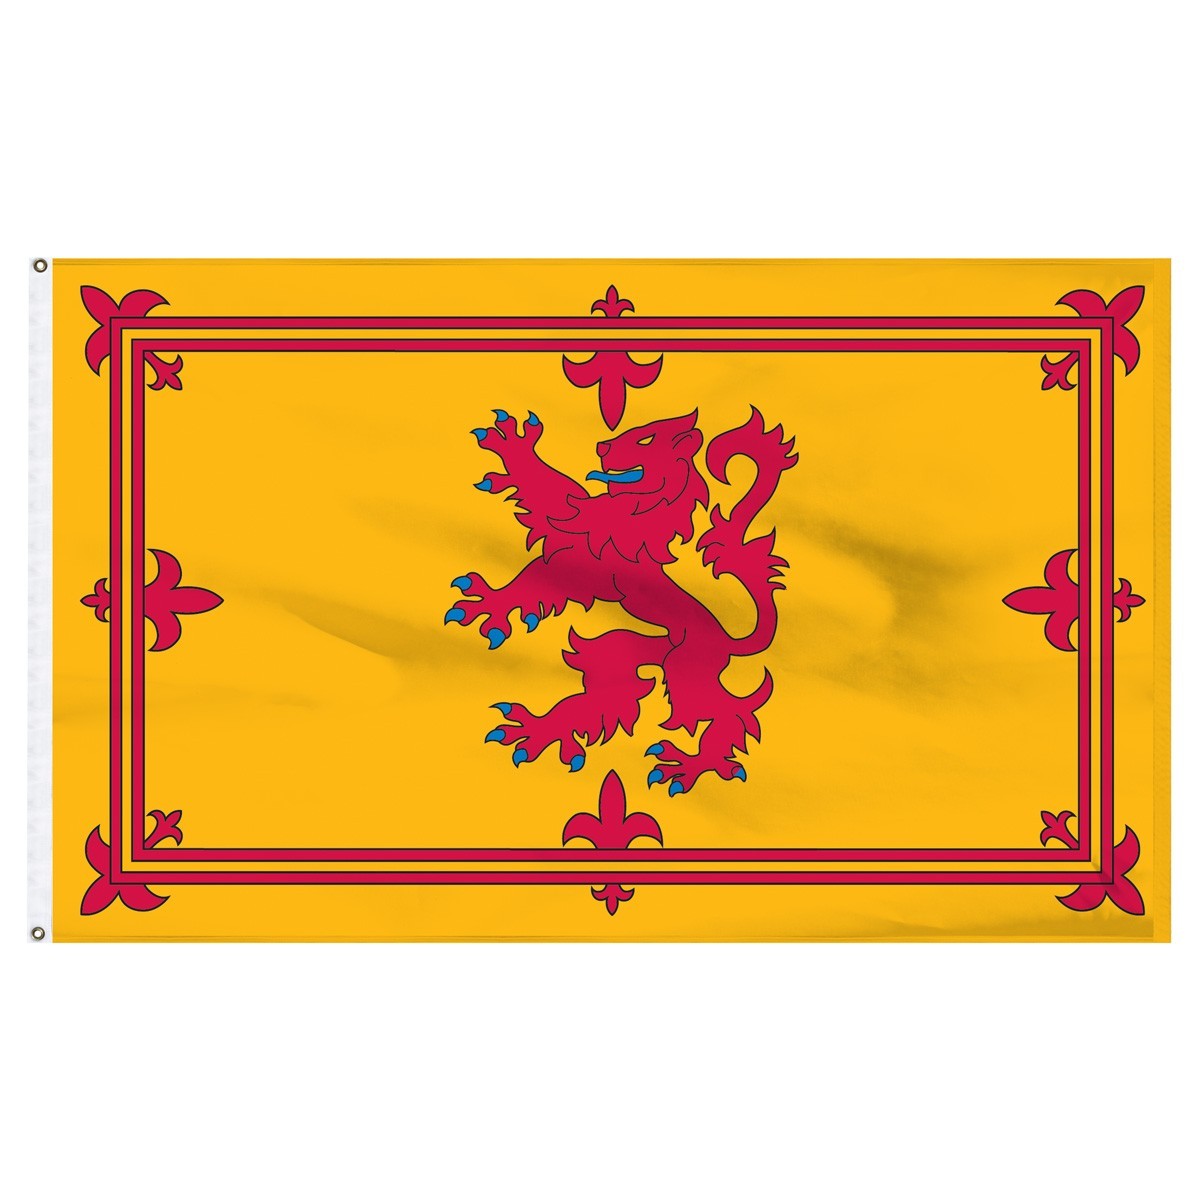 Scotland Rampant Lion Flag, The Queens Flag 4X6 ft flag